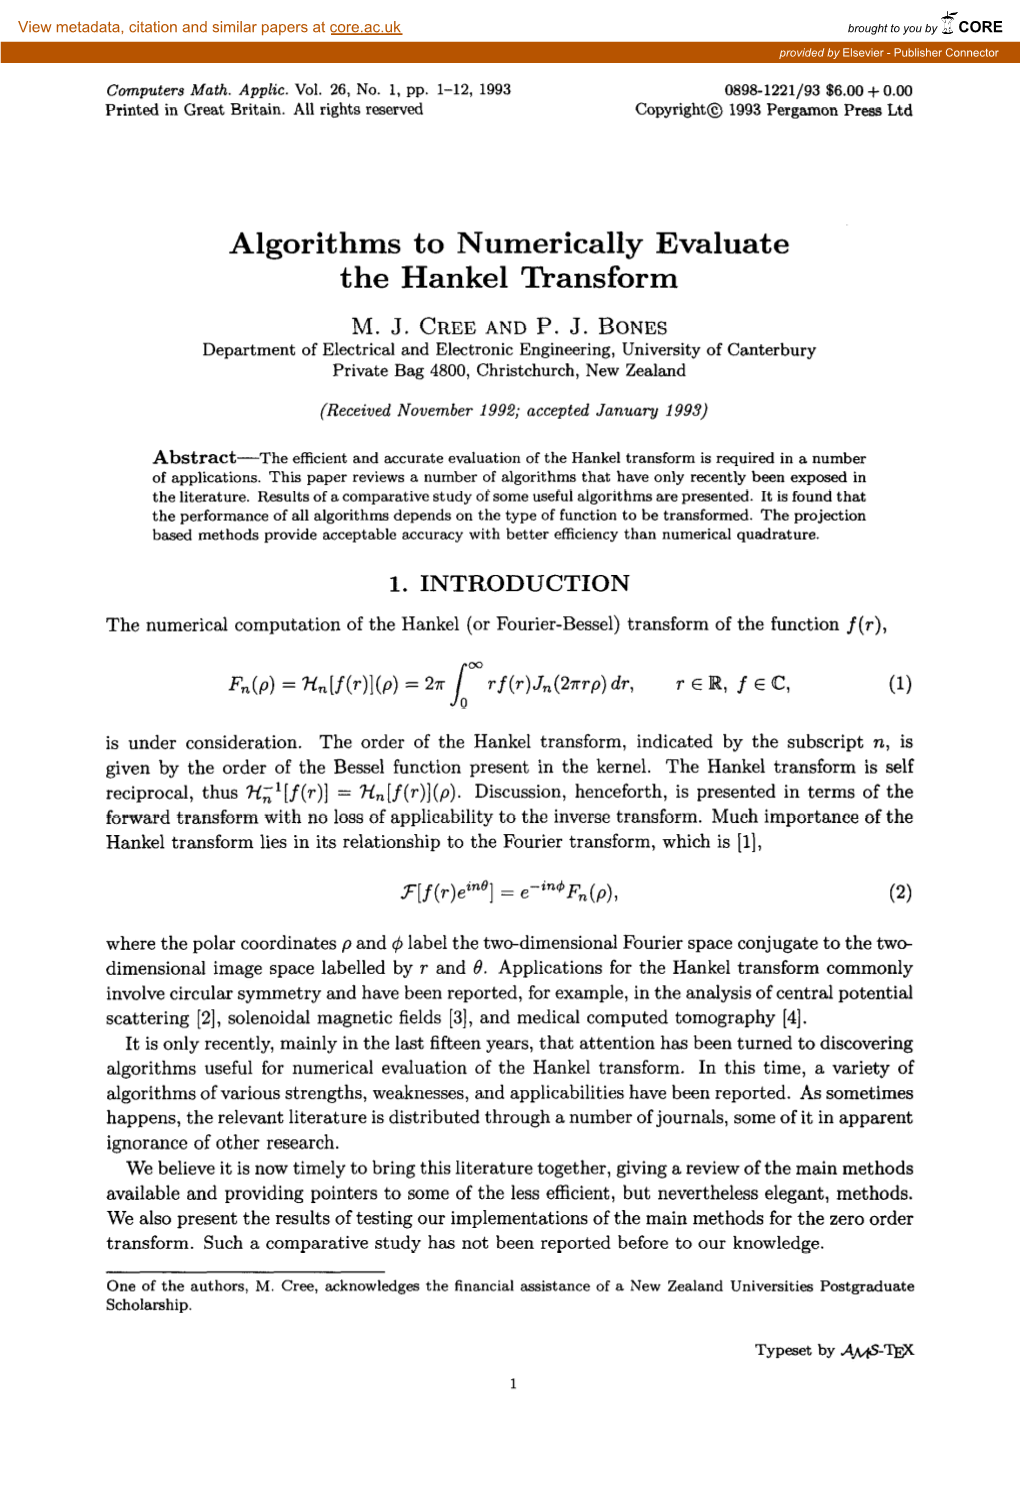 Algorithms to Numerically Evaluate the Hankel Transform